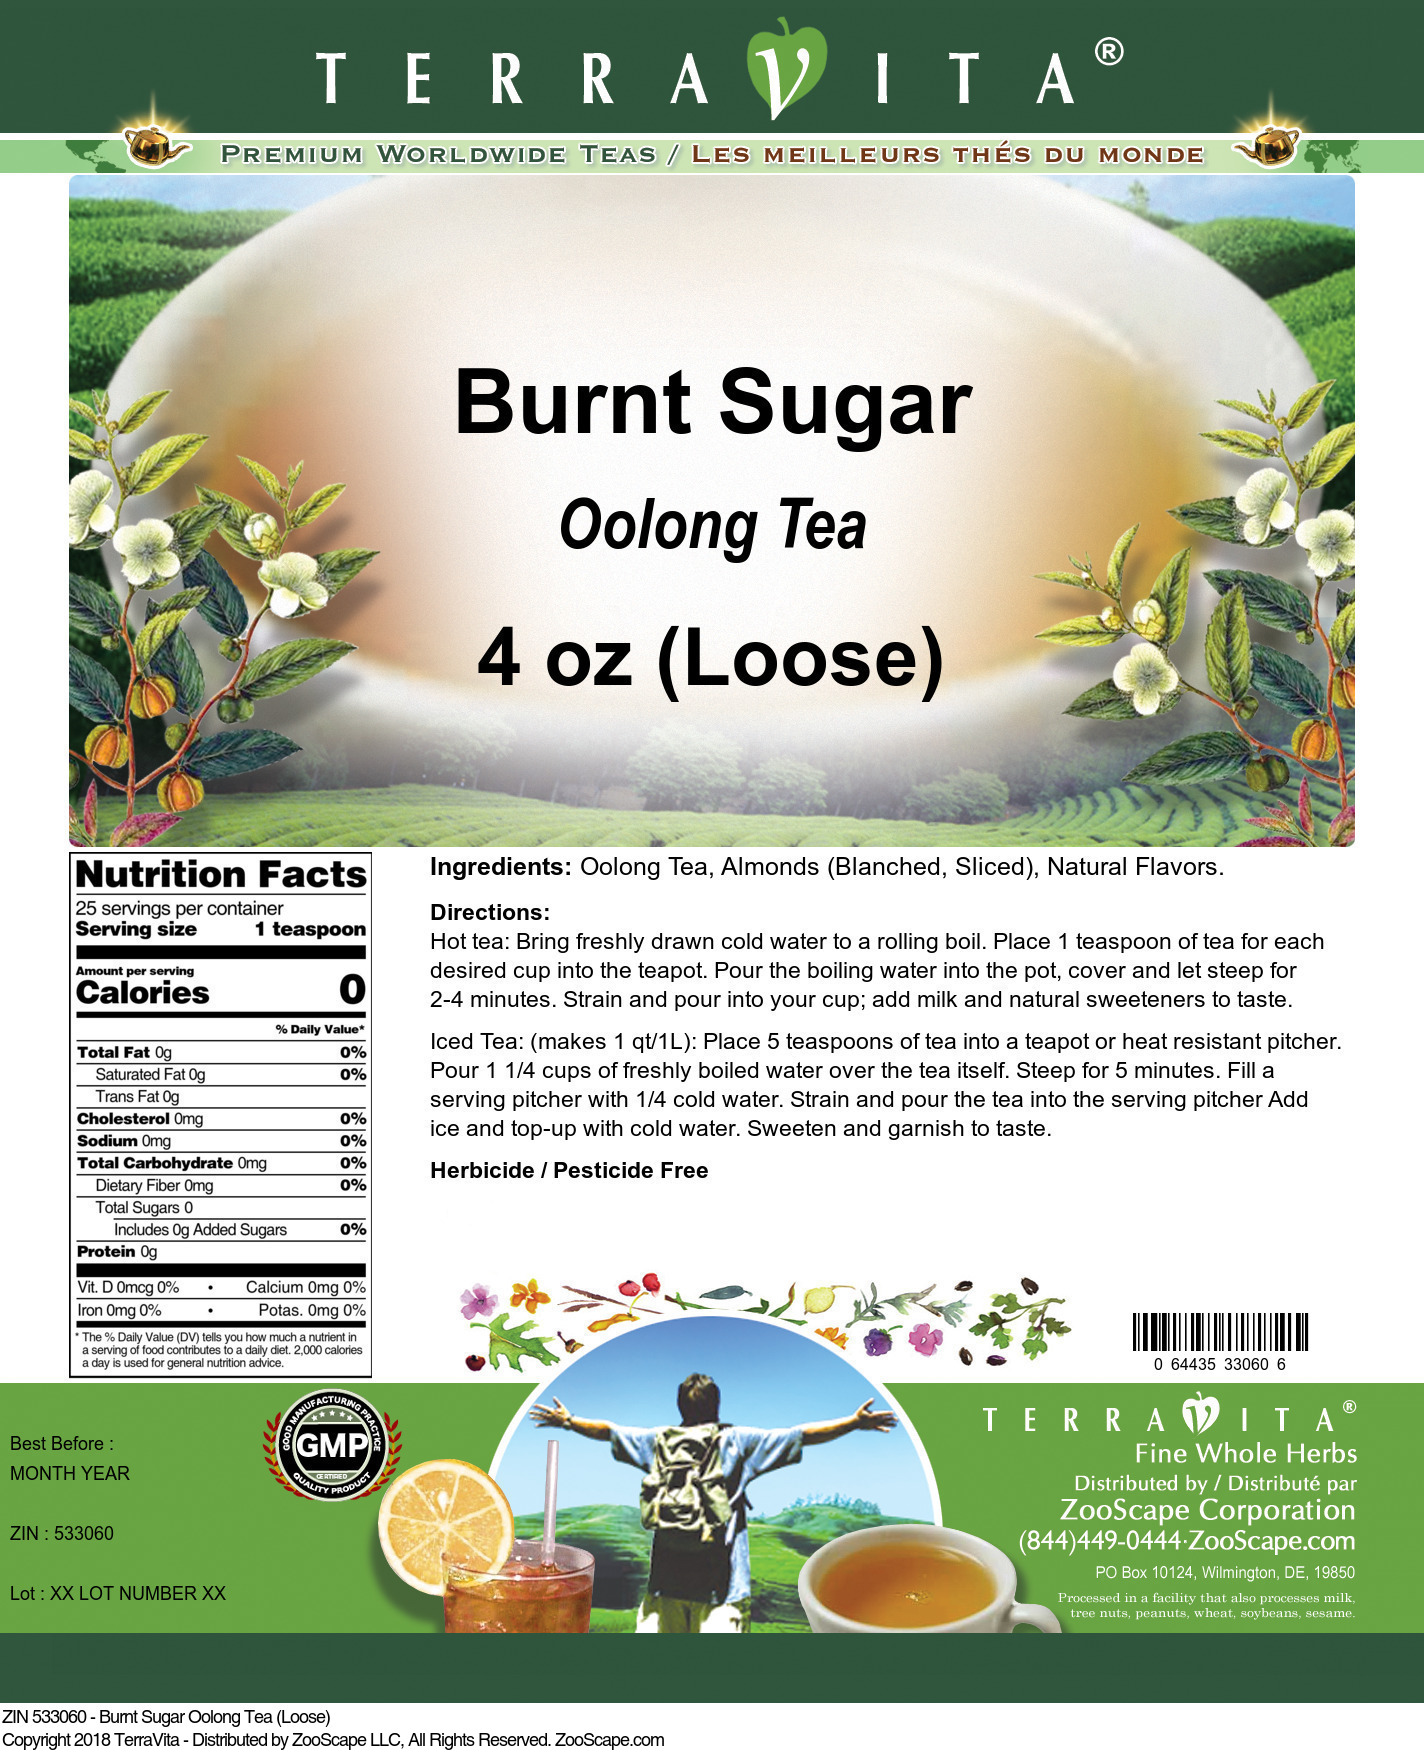 Burnt Sugar Oolong Tea (Loose) - Label